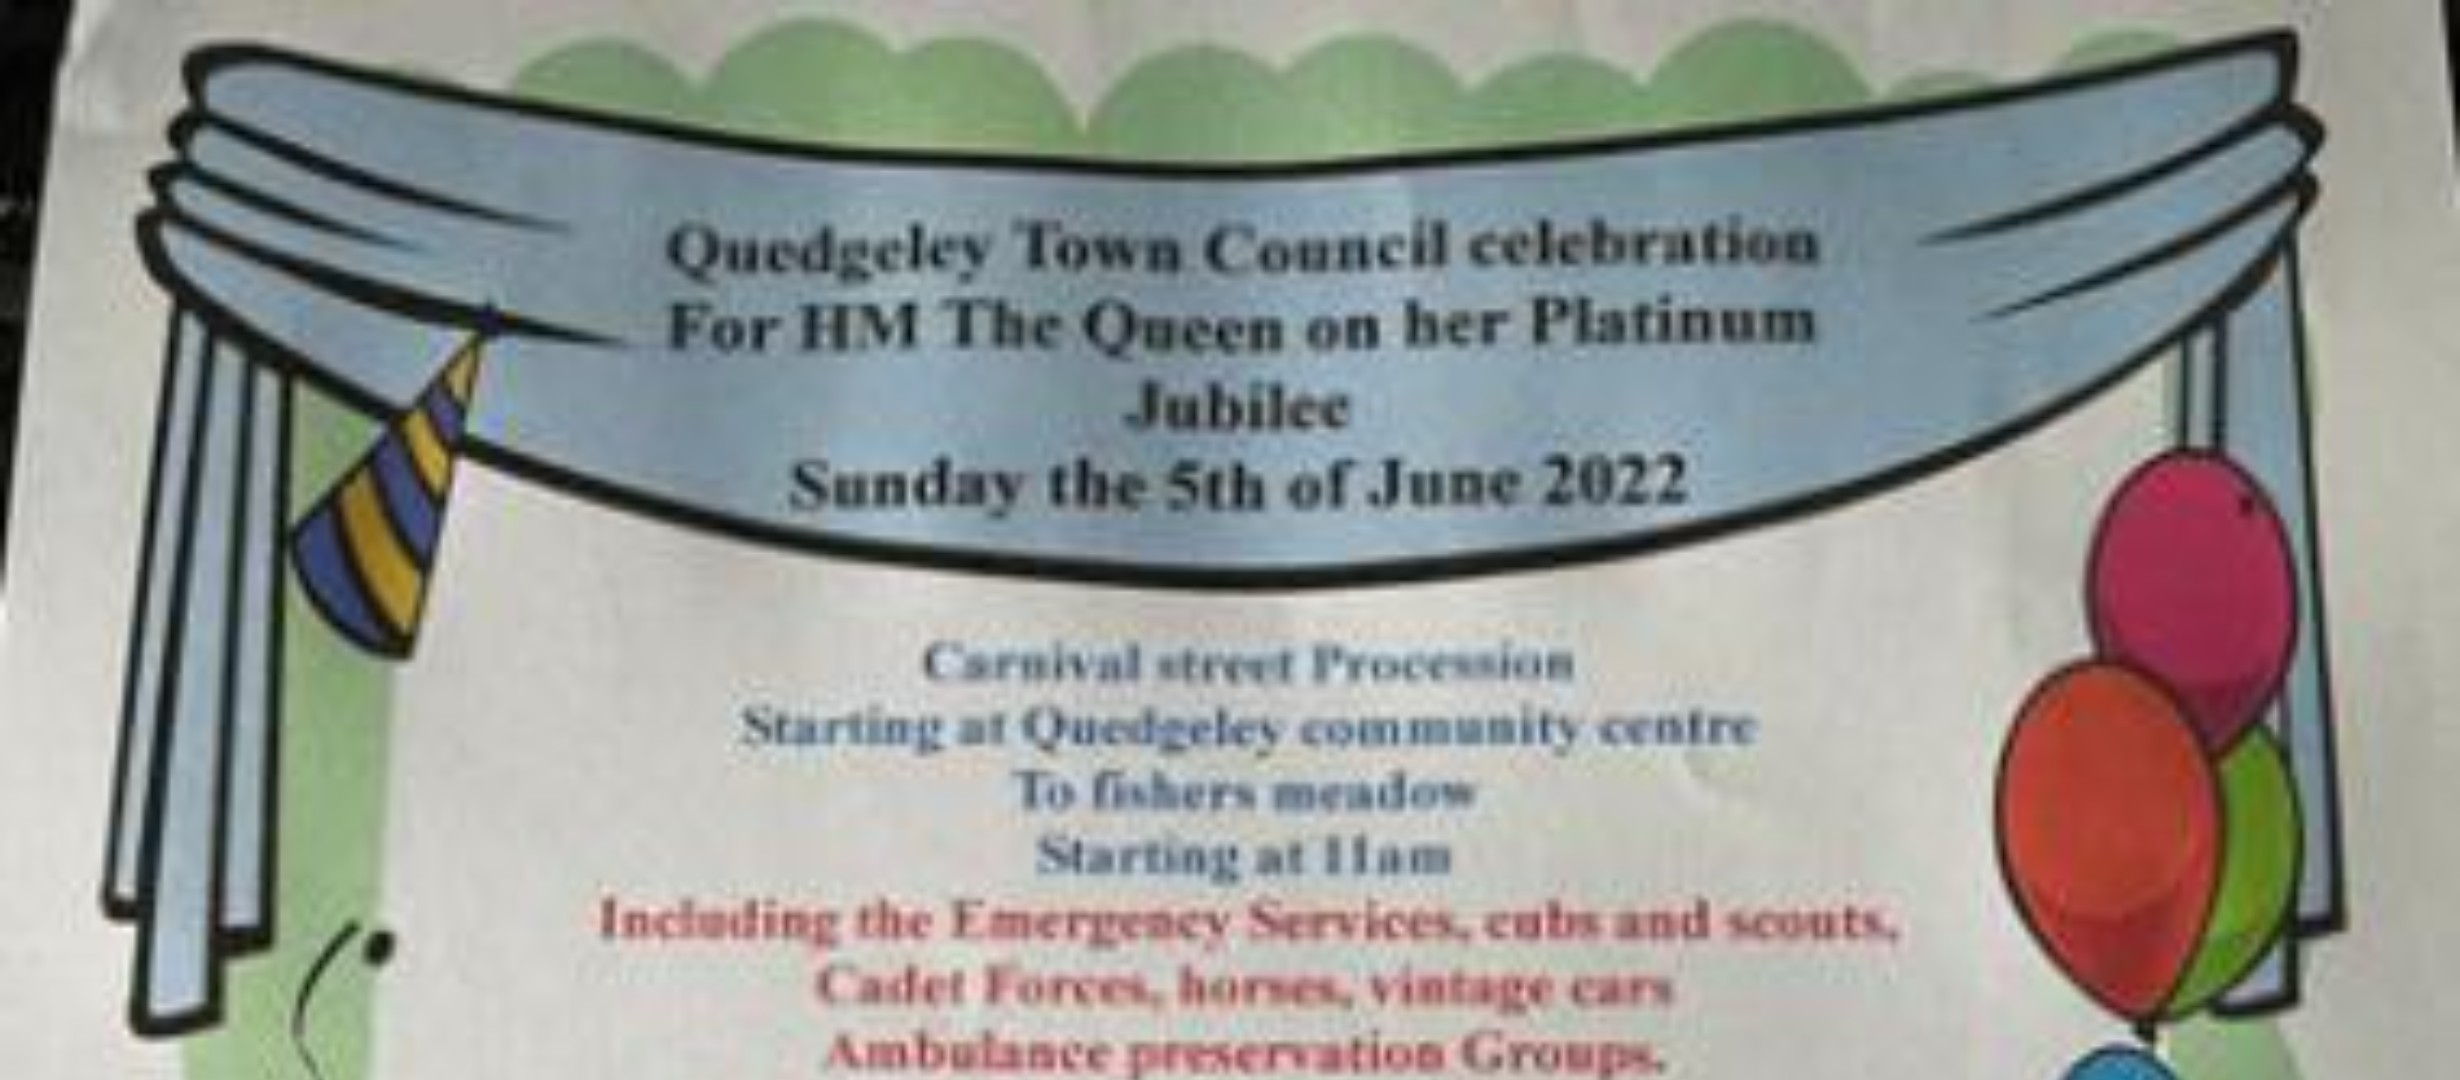 image of advert for Quedgley Platinum celebrations